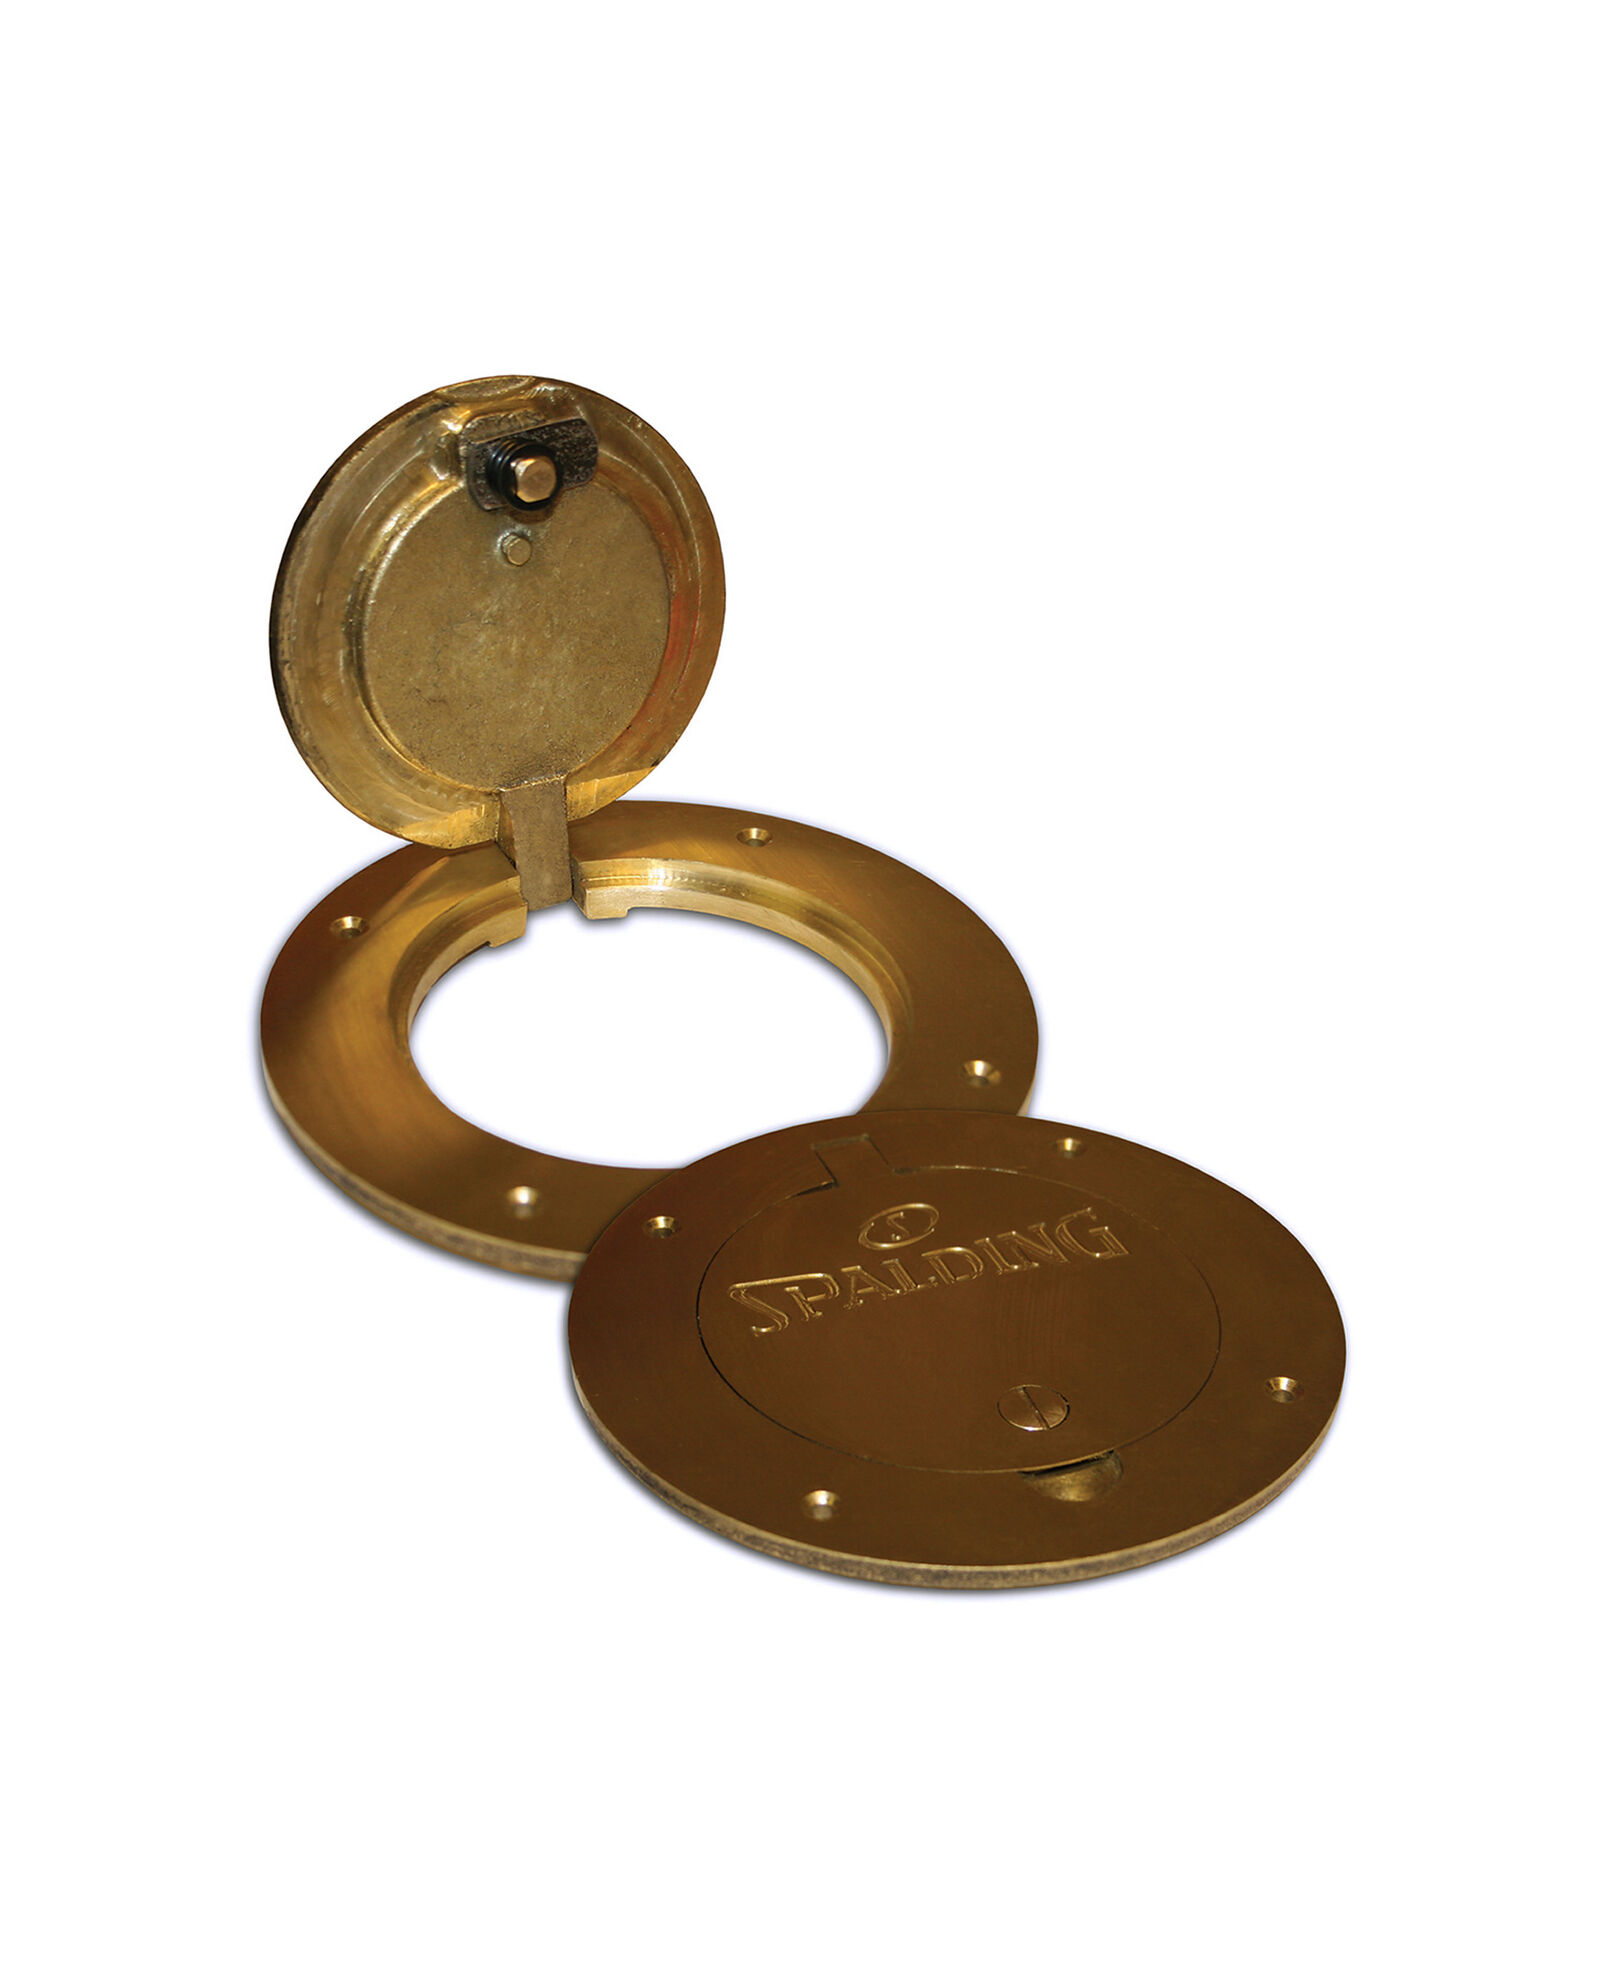 Locking Brass Floor Plate/Sleeve 